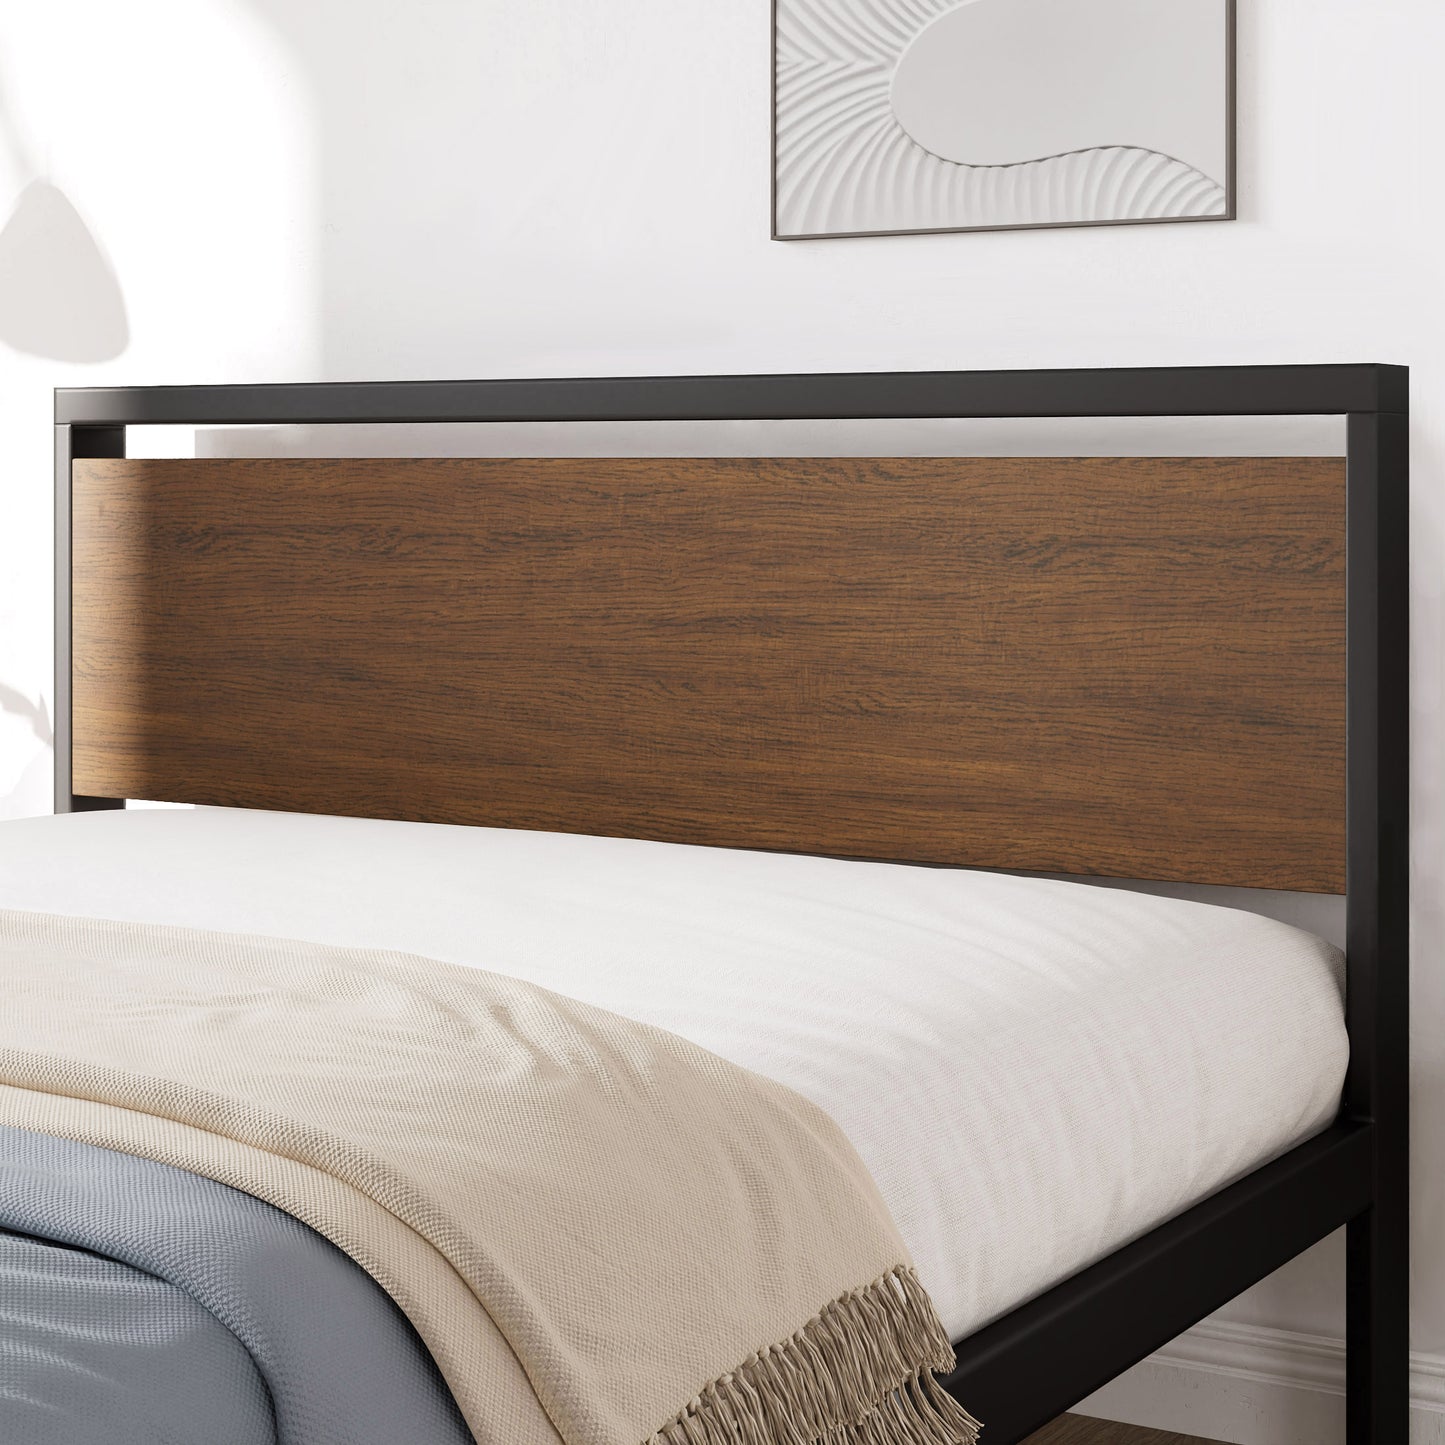 Allewie King Size Platform Bed with Wood Headboard and Footboard, Heavy Duty Metal Slat